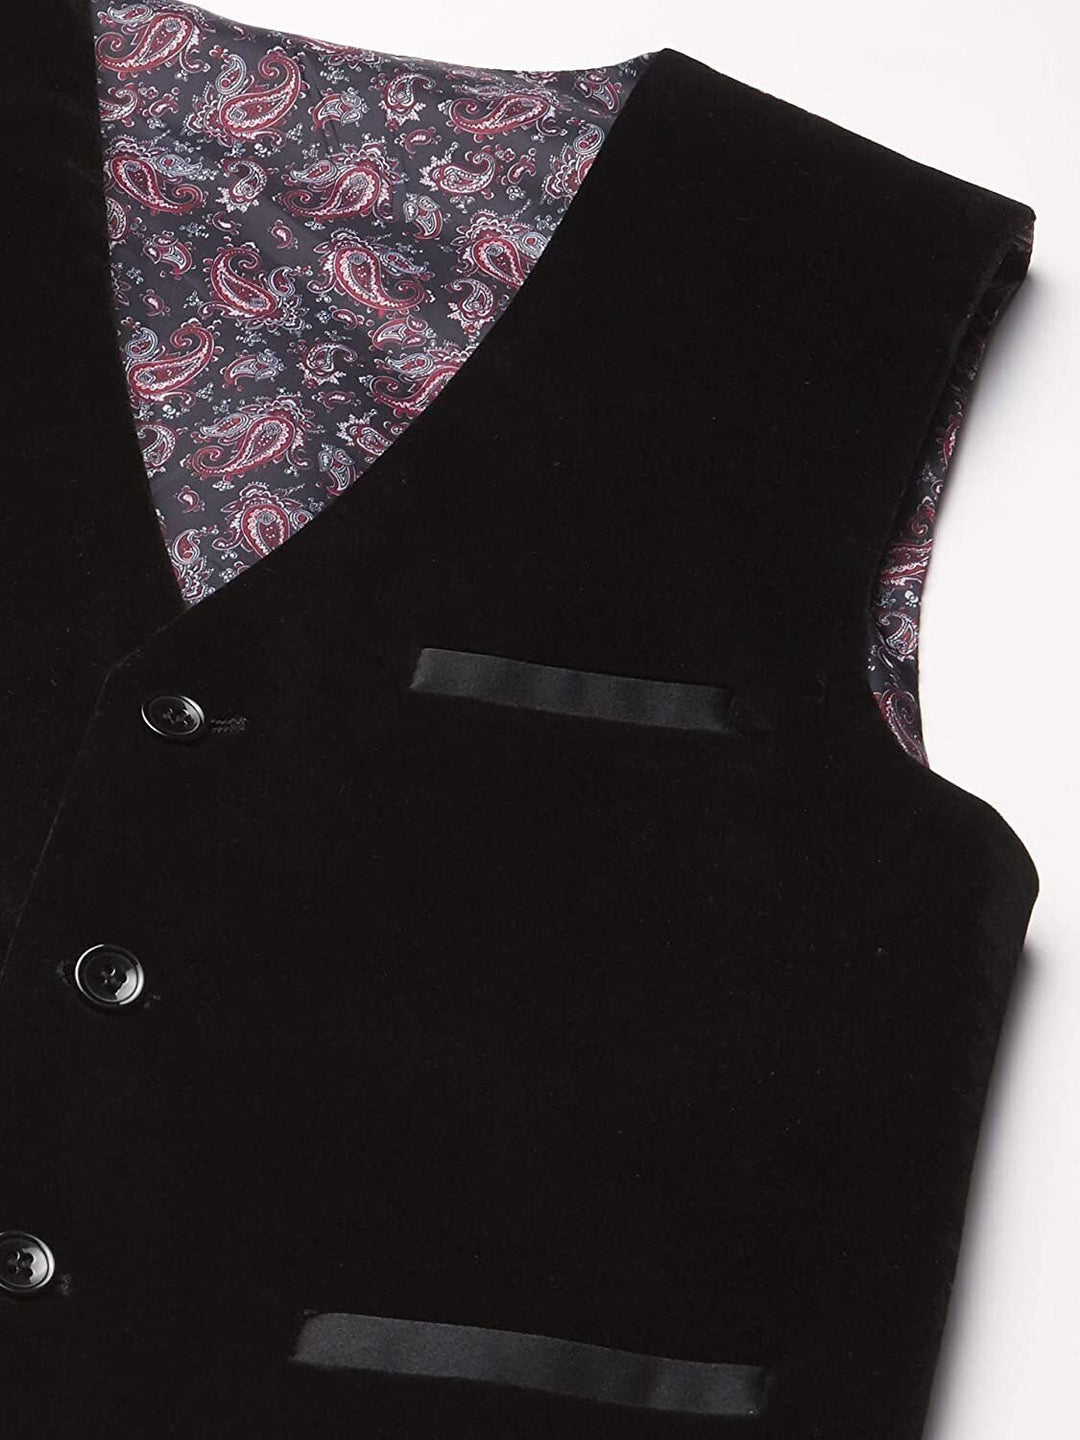 Isaac Mizrahi Boys' Slim Fit 3 Piece Velvet Suit